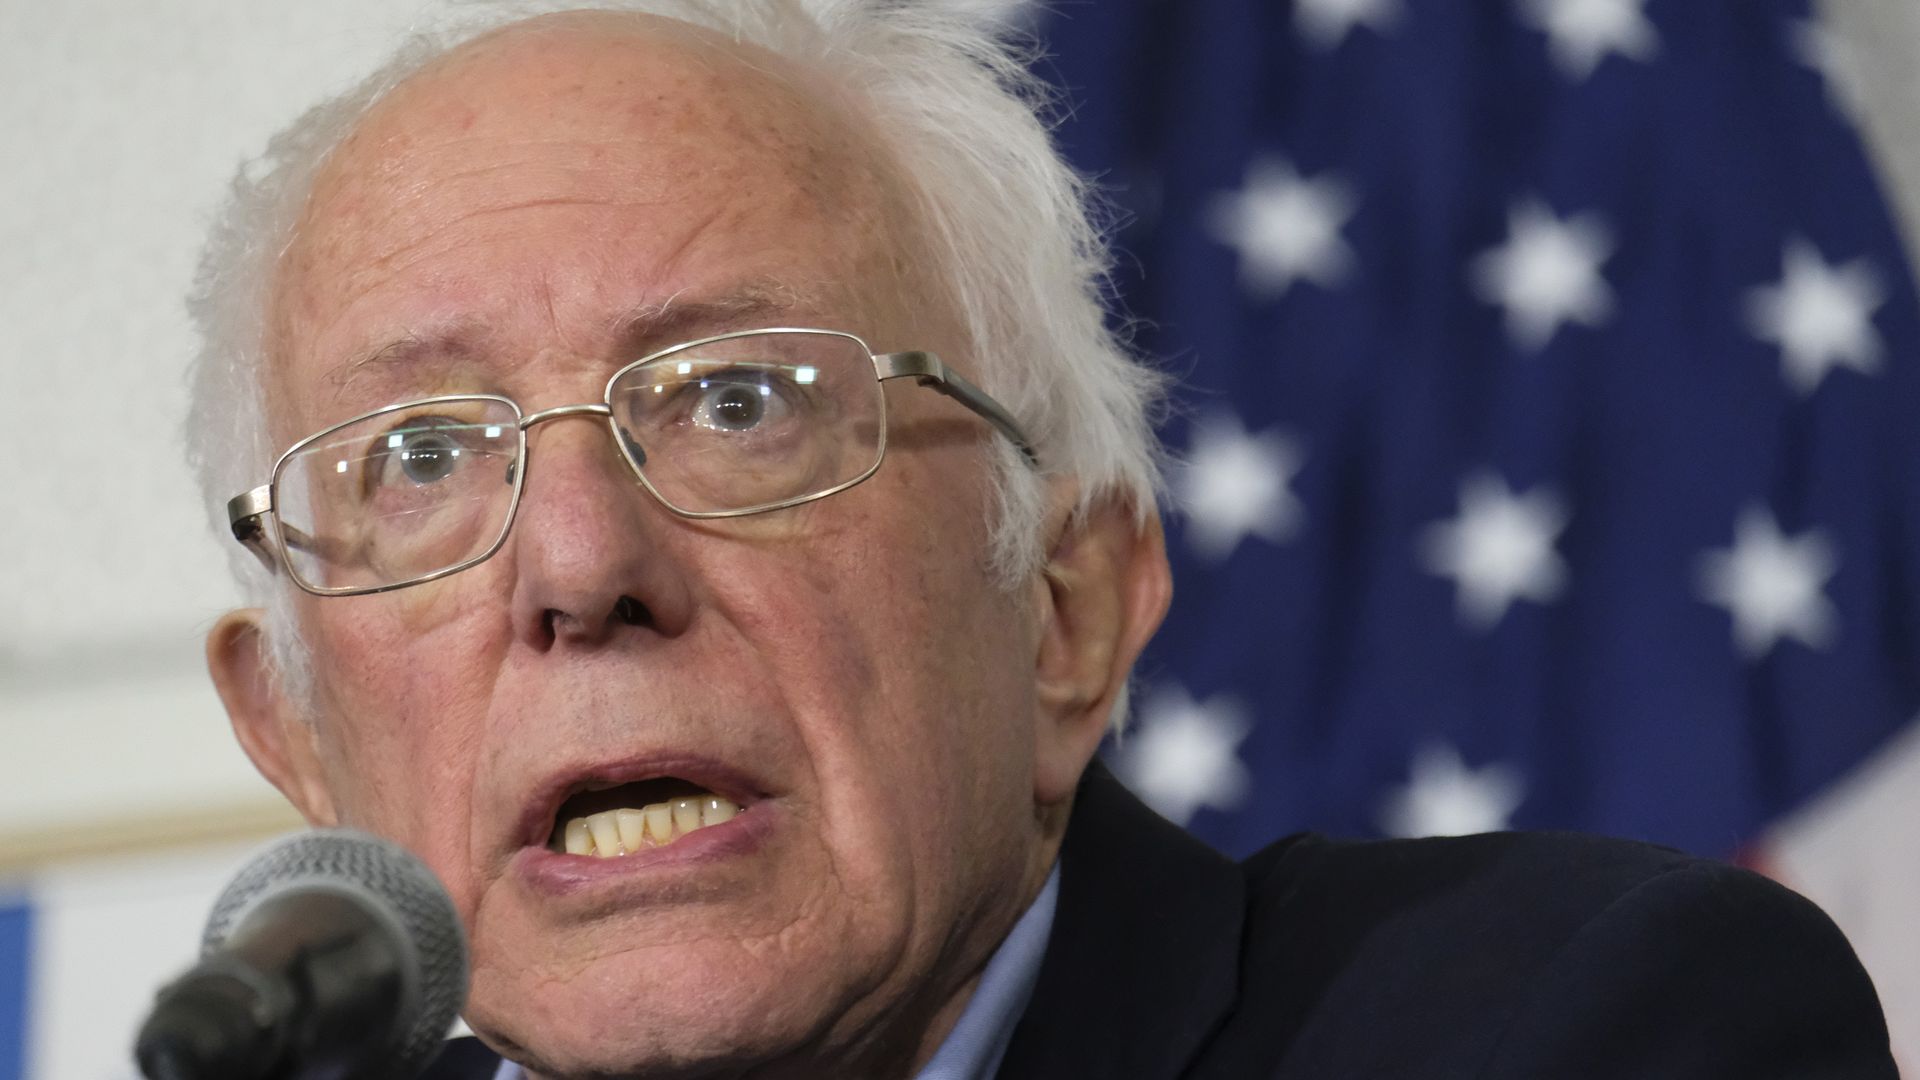 In this image, Bernie Sanders speaks into a microphone. 